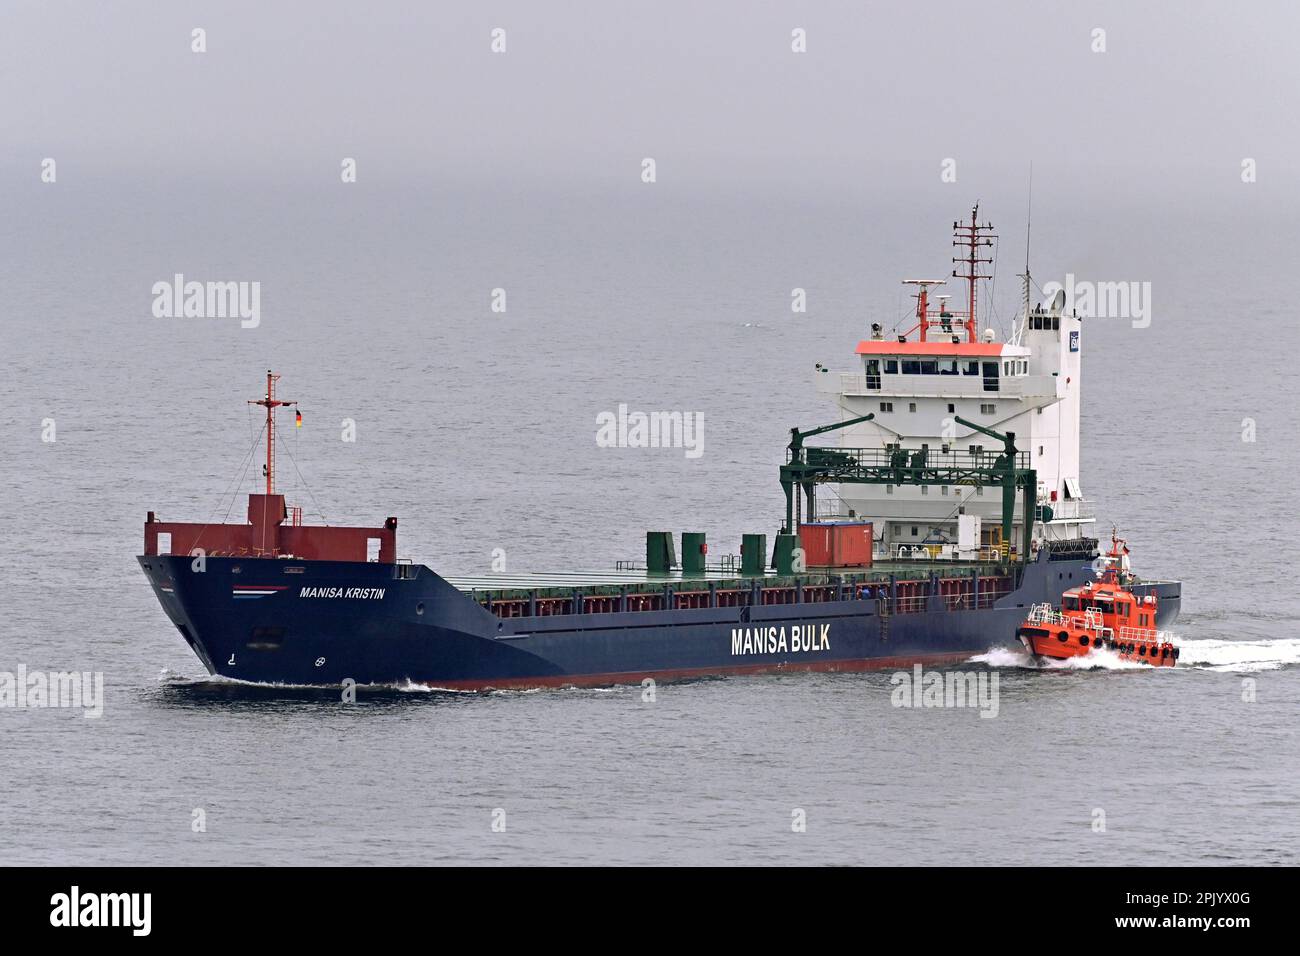 General cargo Ship MANISA KRISTIN taking pilot at the Kiel lighthouse Stock Photo